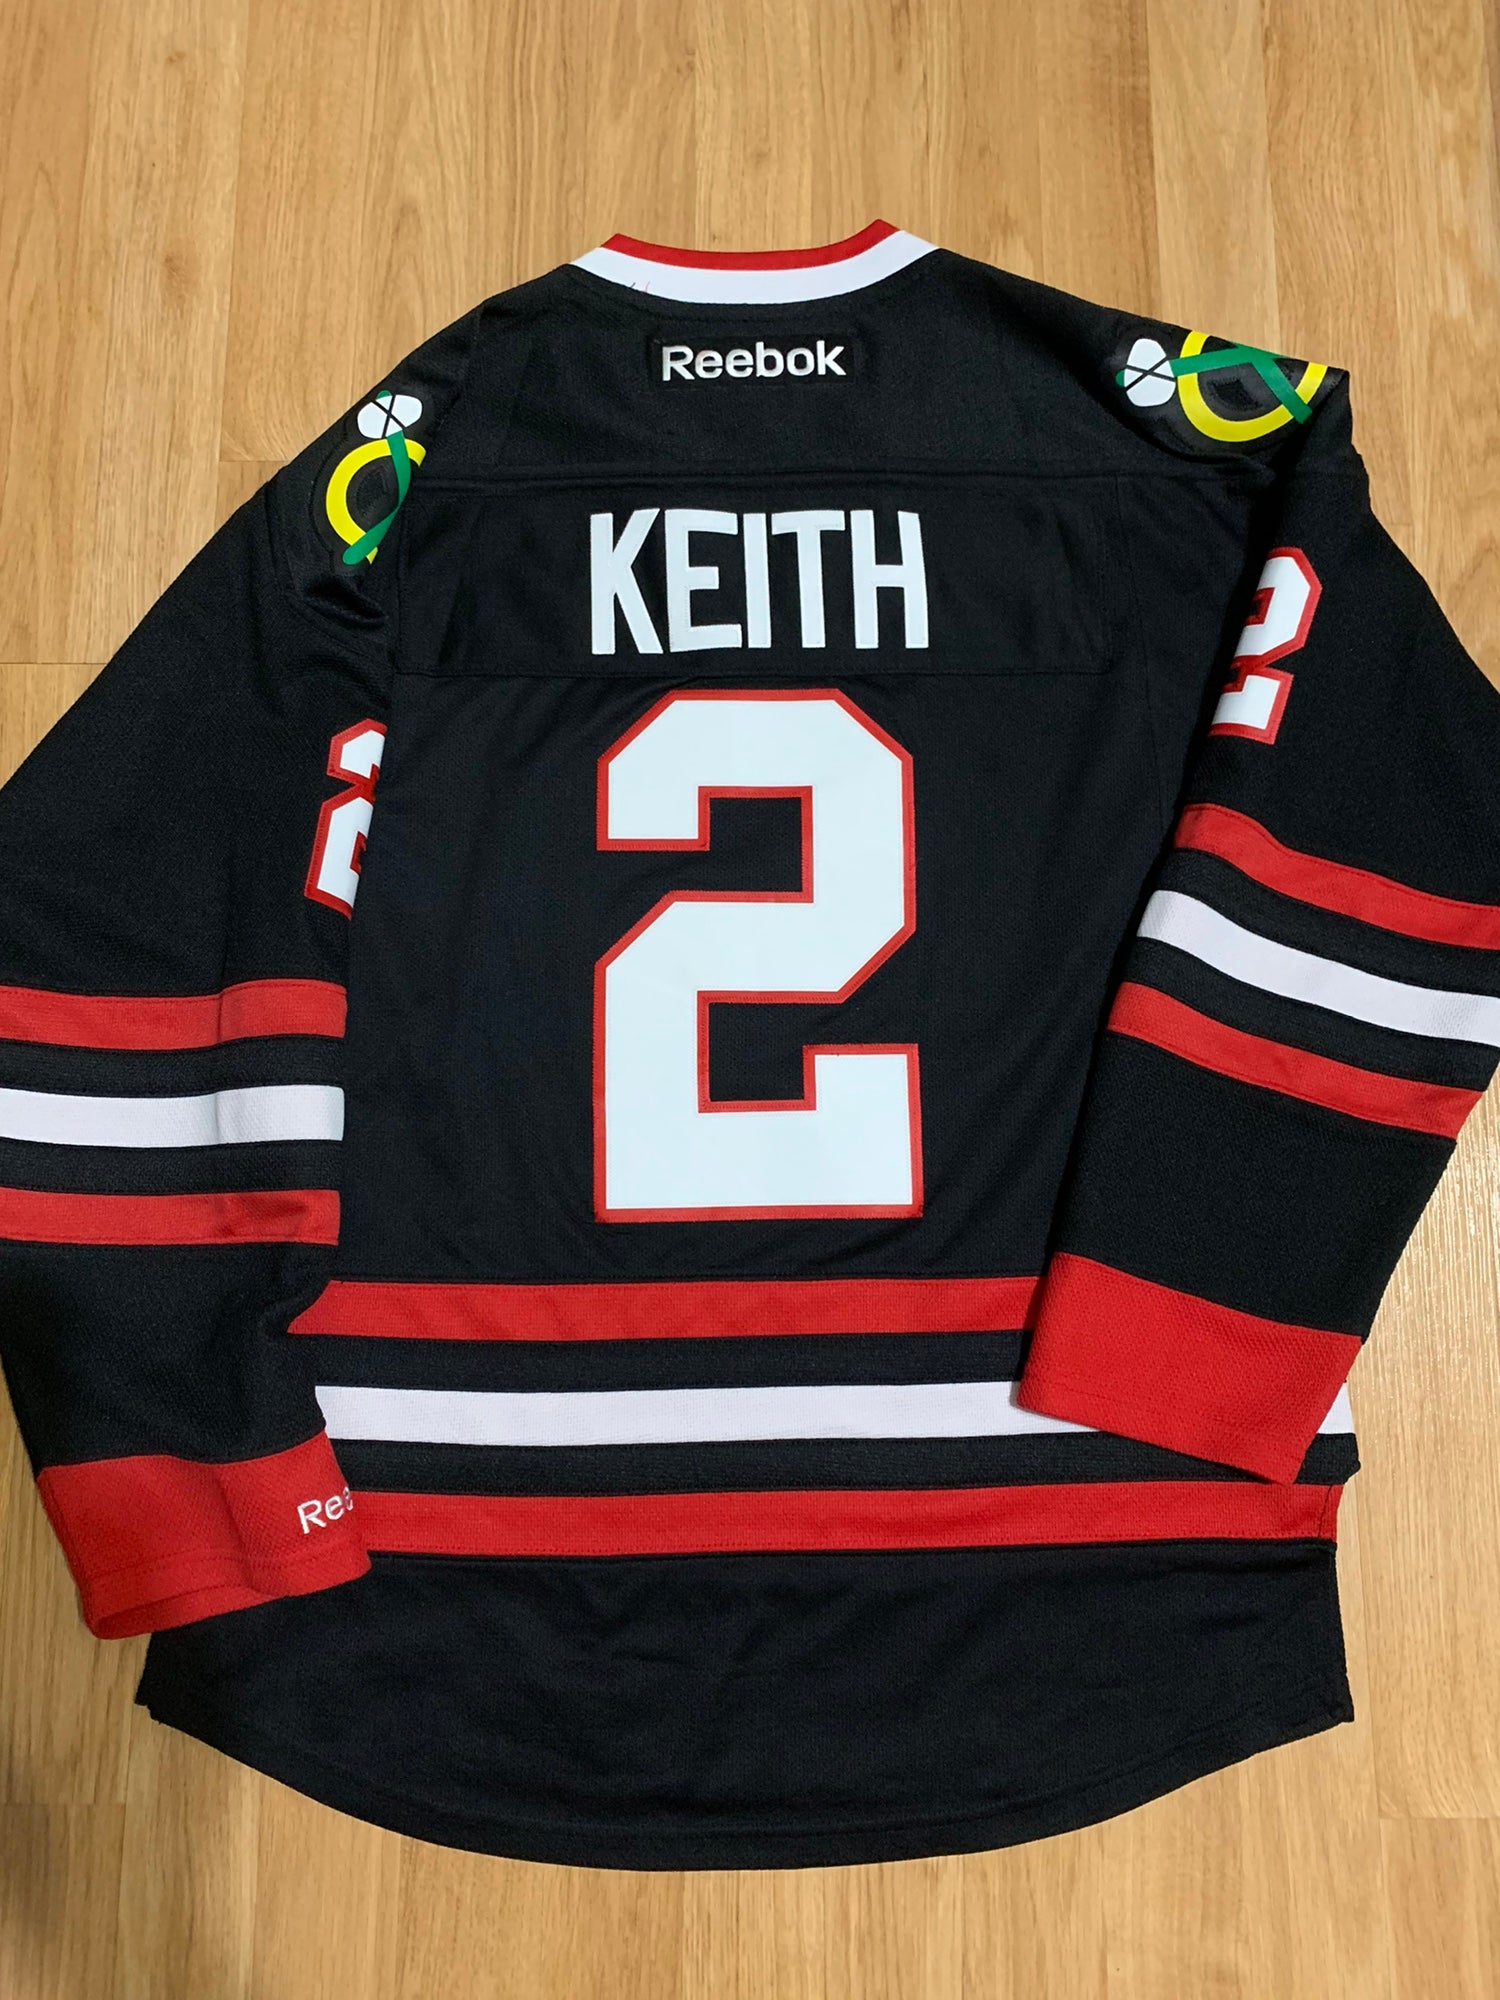 Reebok Duncan Keith Chicago Blackhawks NHL Hockey Jersey Black